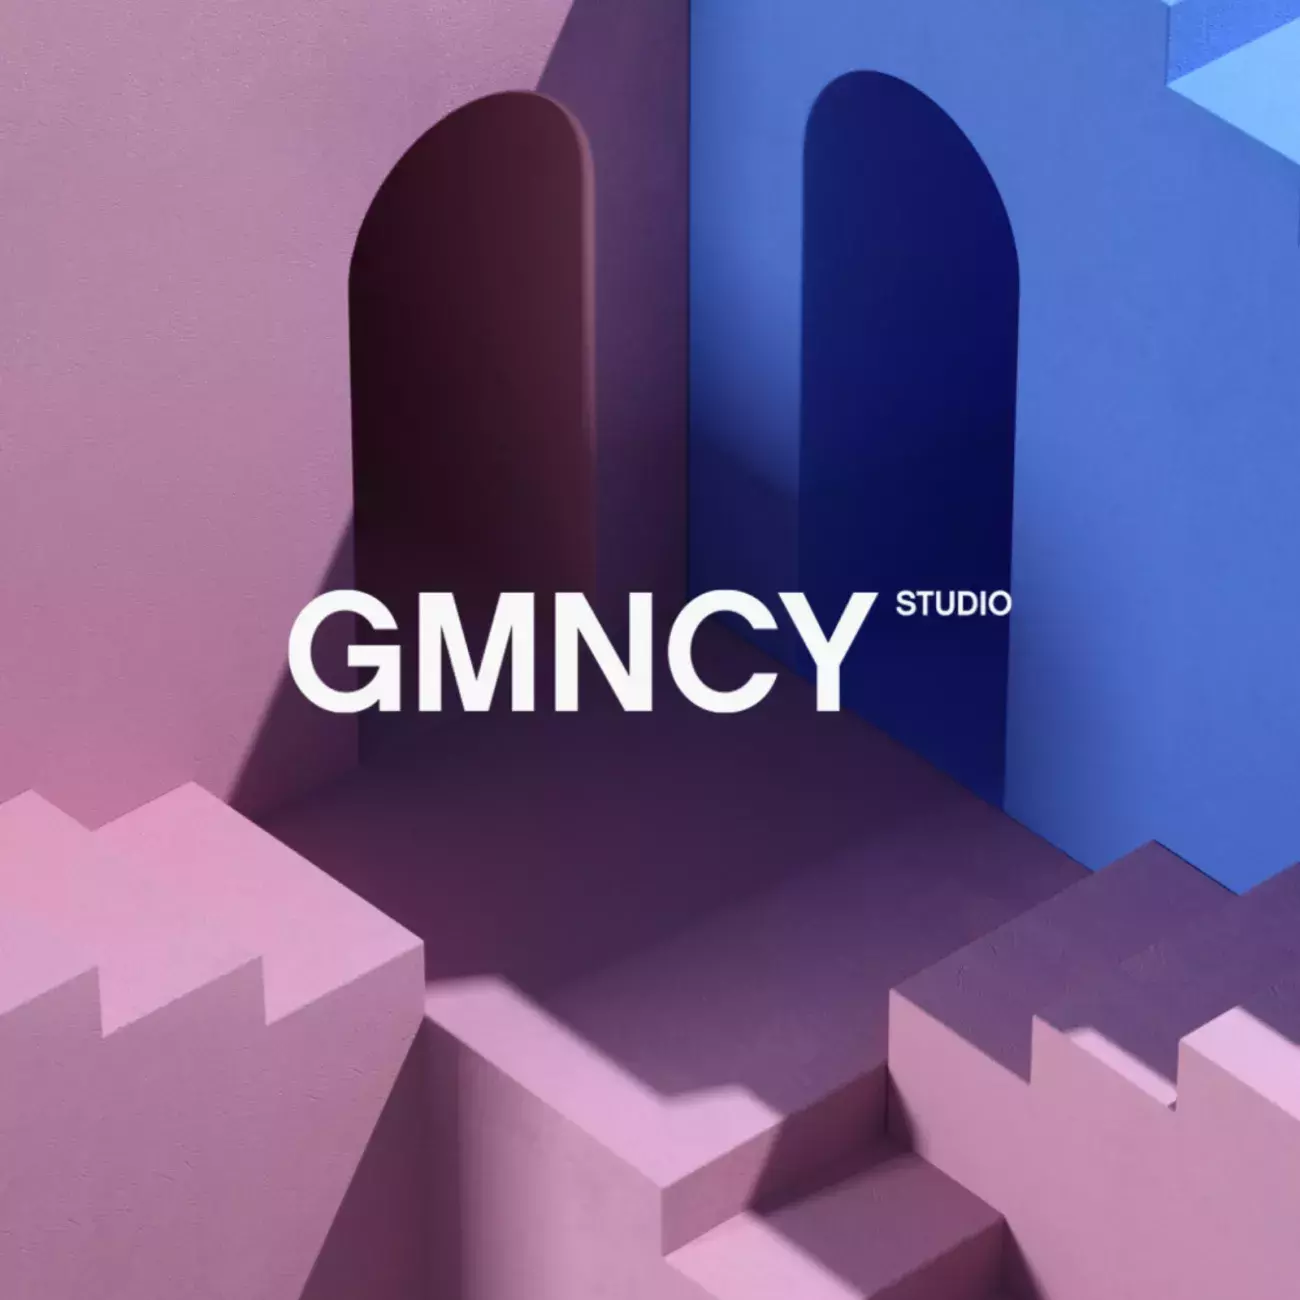 Geomancy Studio branding and visual identity